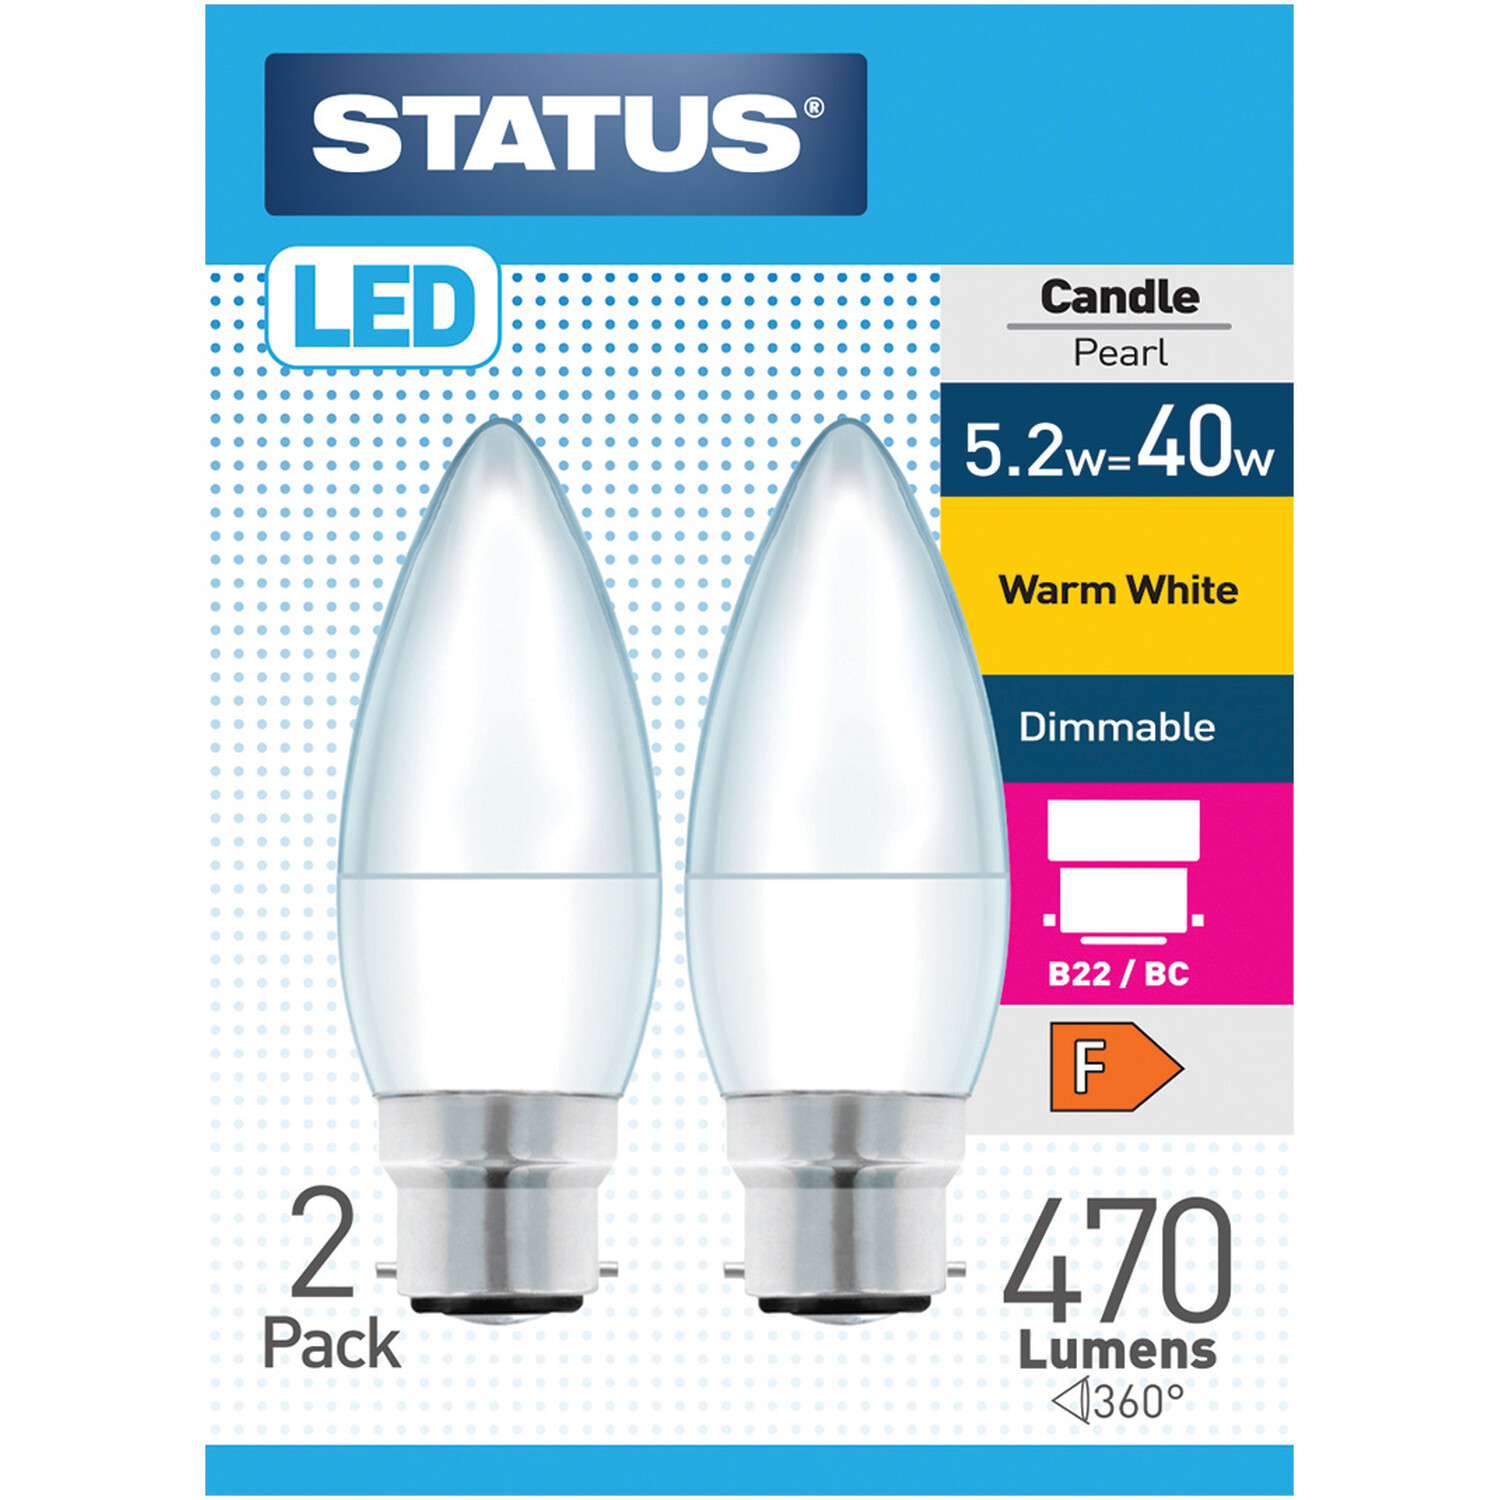 Status 2 Pack Bayonet B22/BC LED 5.2W Pearl Candle Light Bulb Image 1